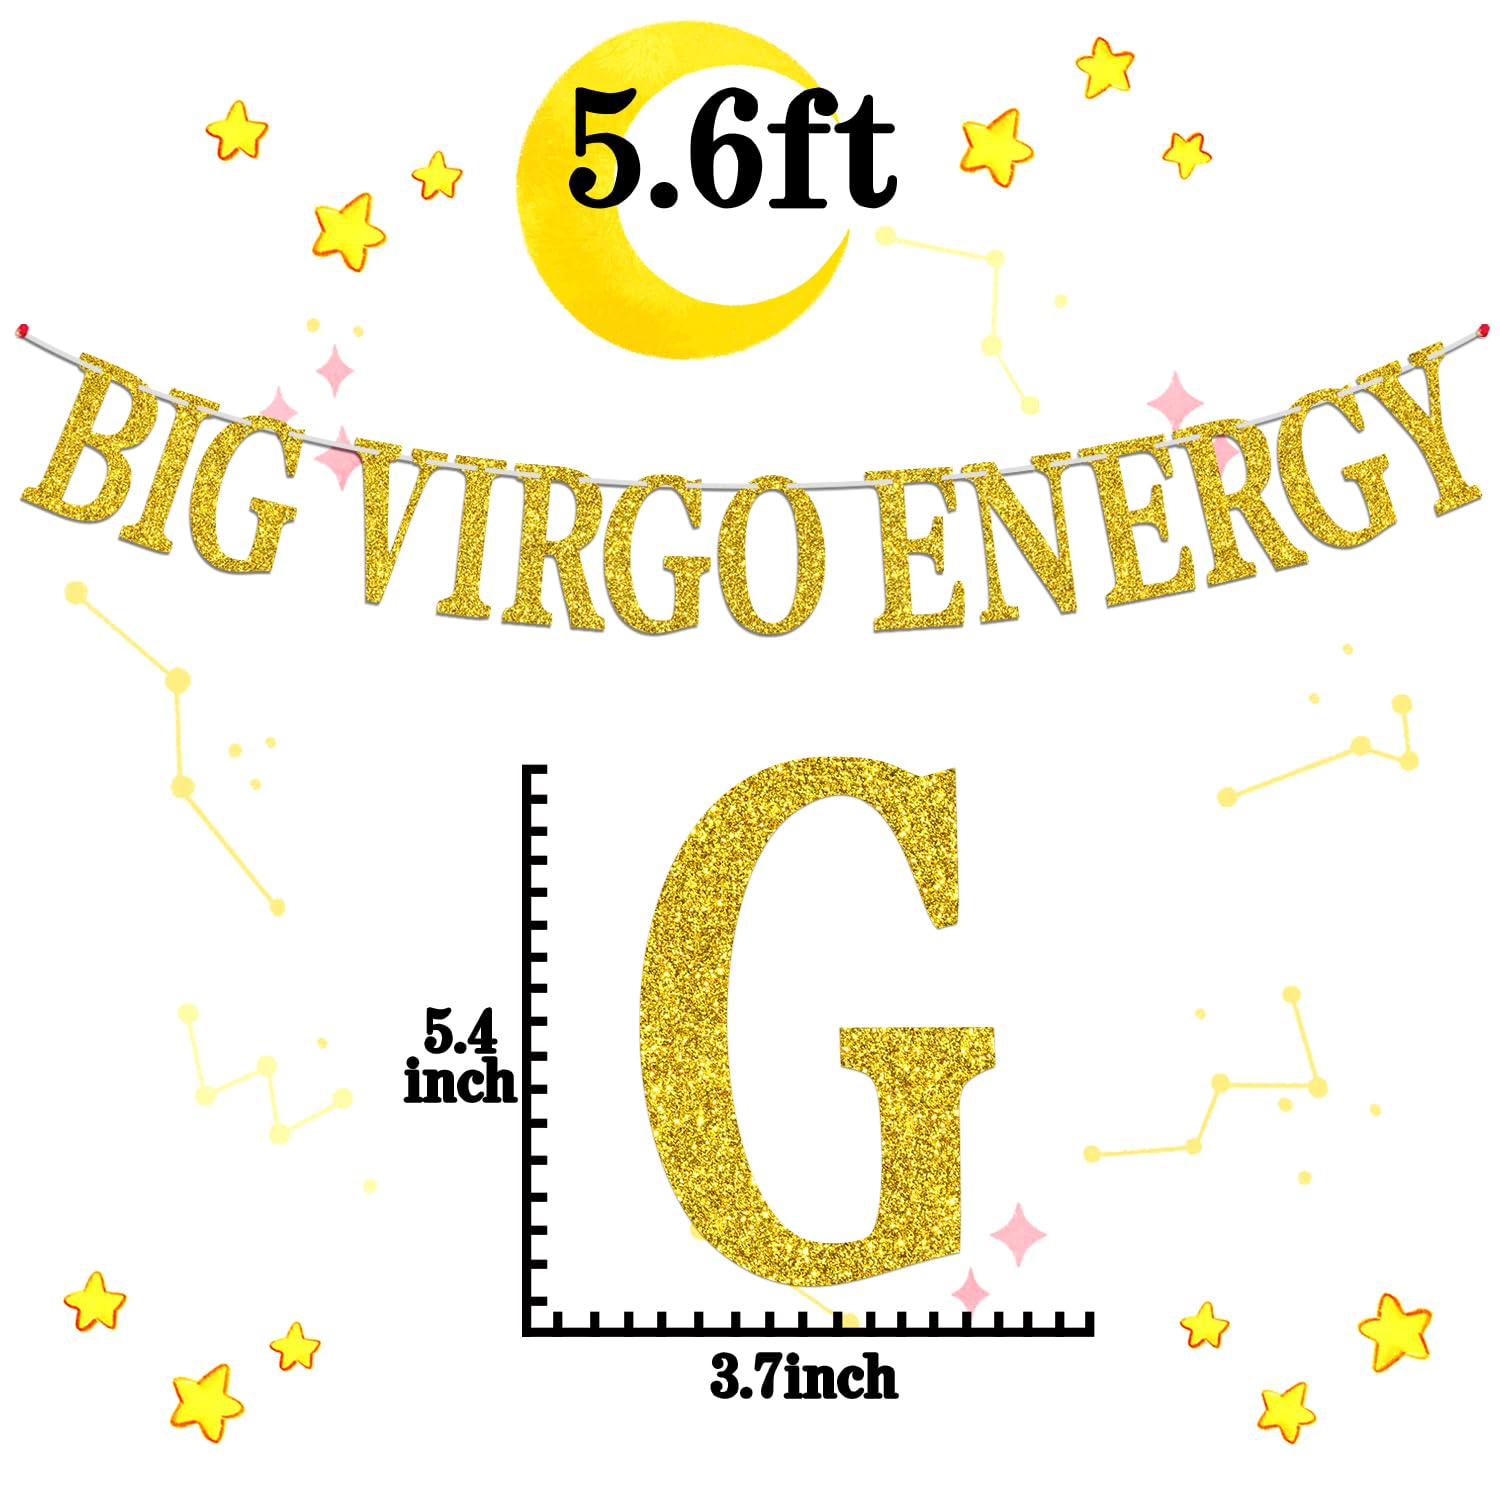 Big Virgo Energy Banner, Virgo Aug/Sept. Birthday Party Decor - 12 Constellation Theme Birthday Party Decorations Supplies, Gold Glitter